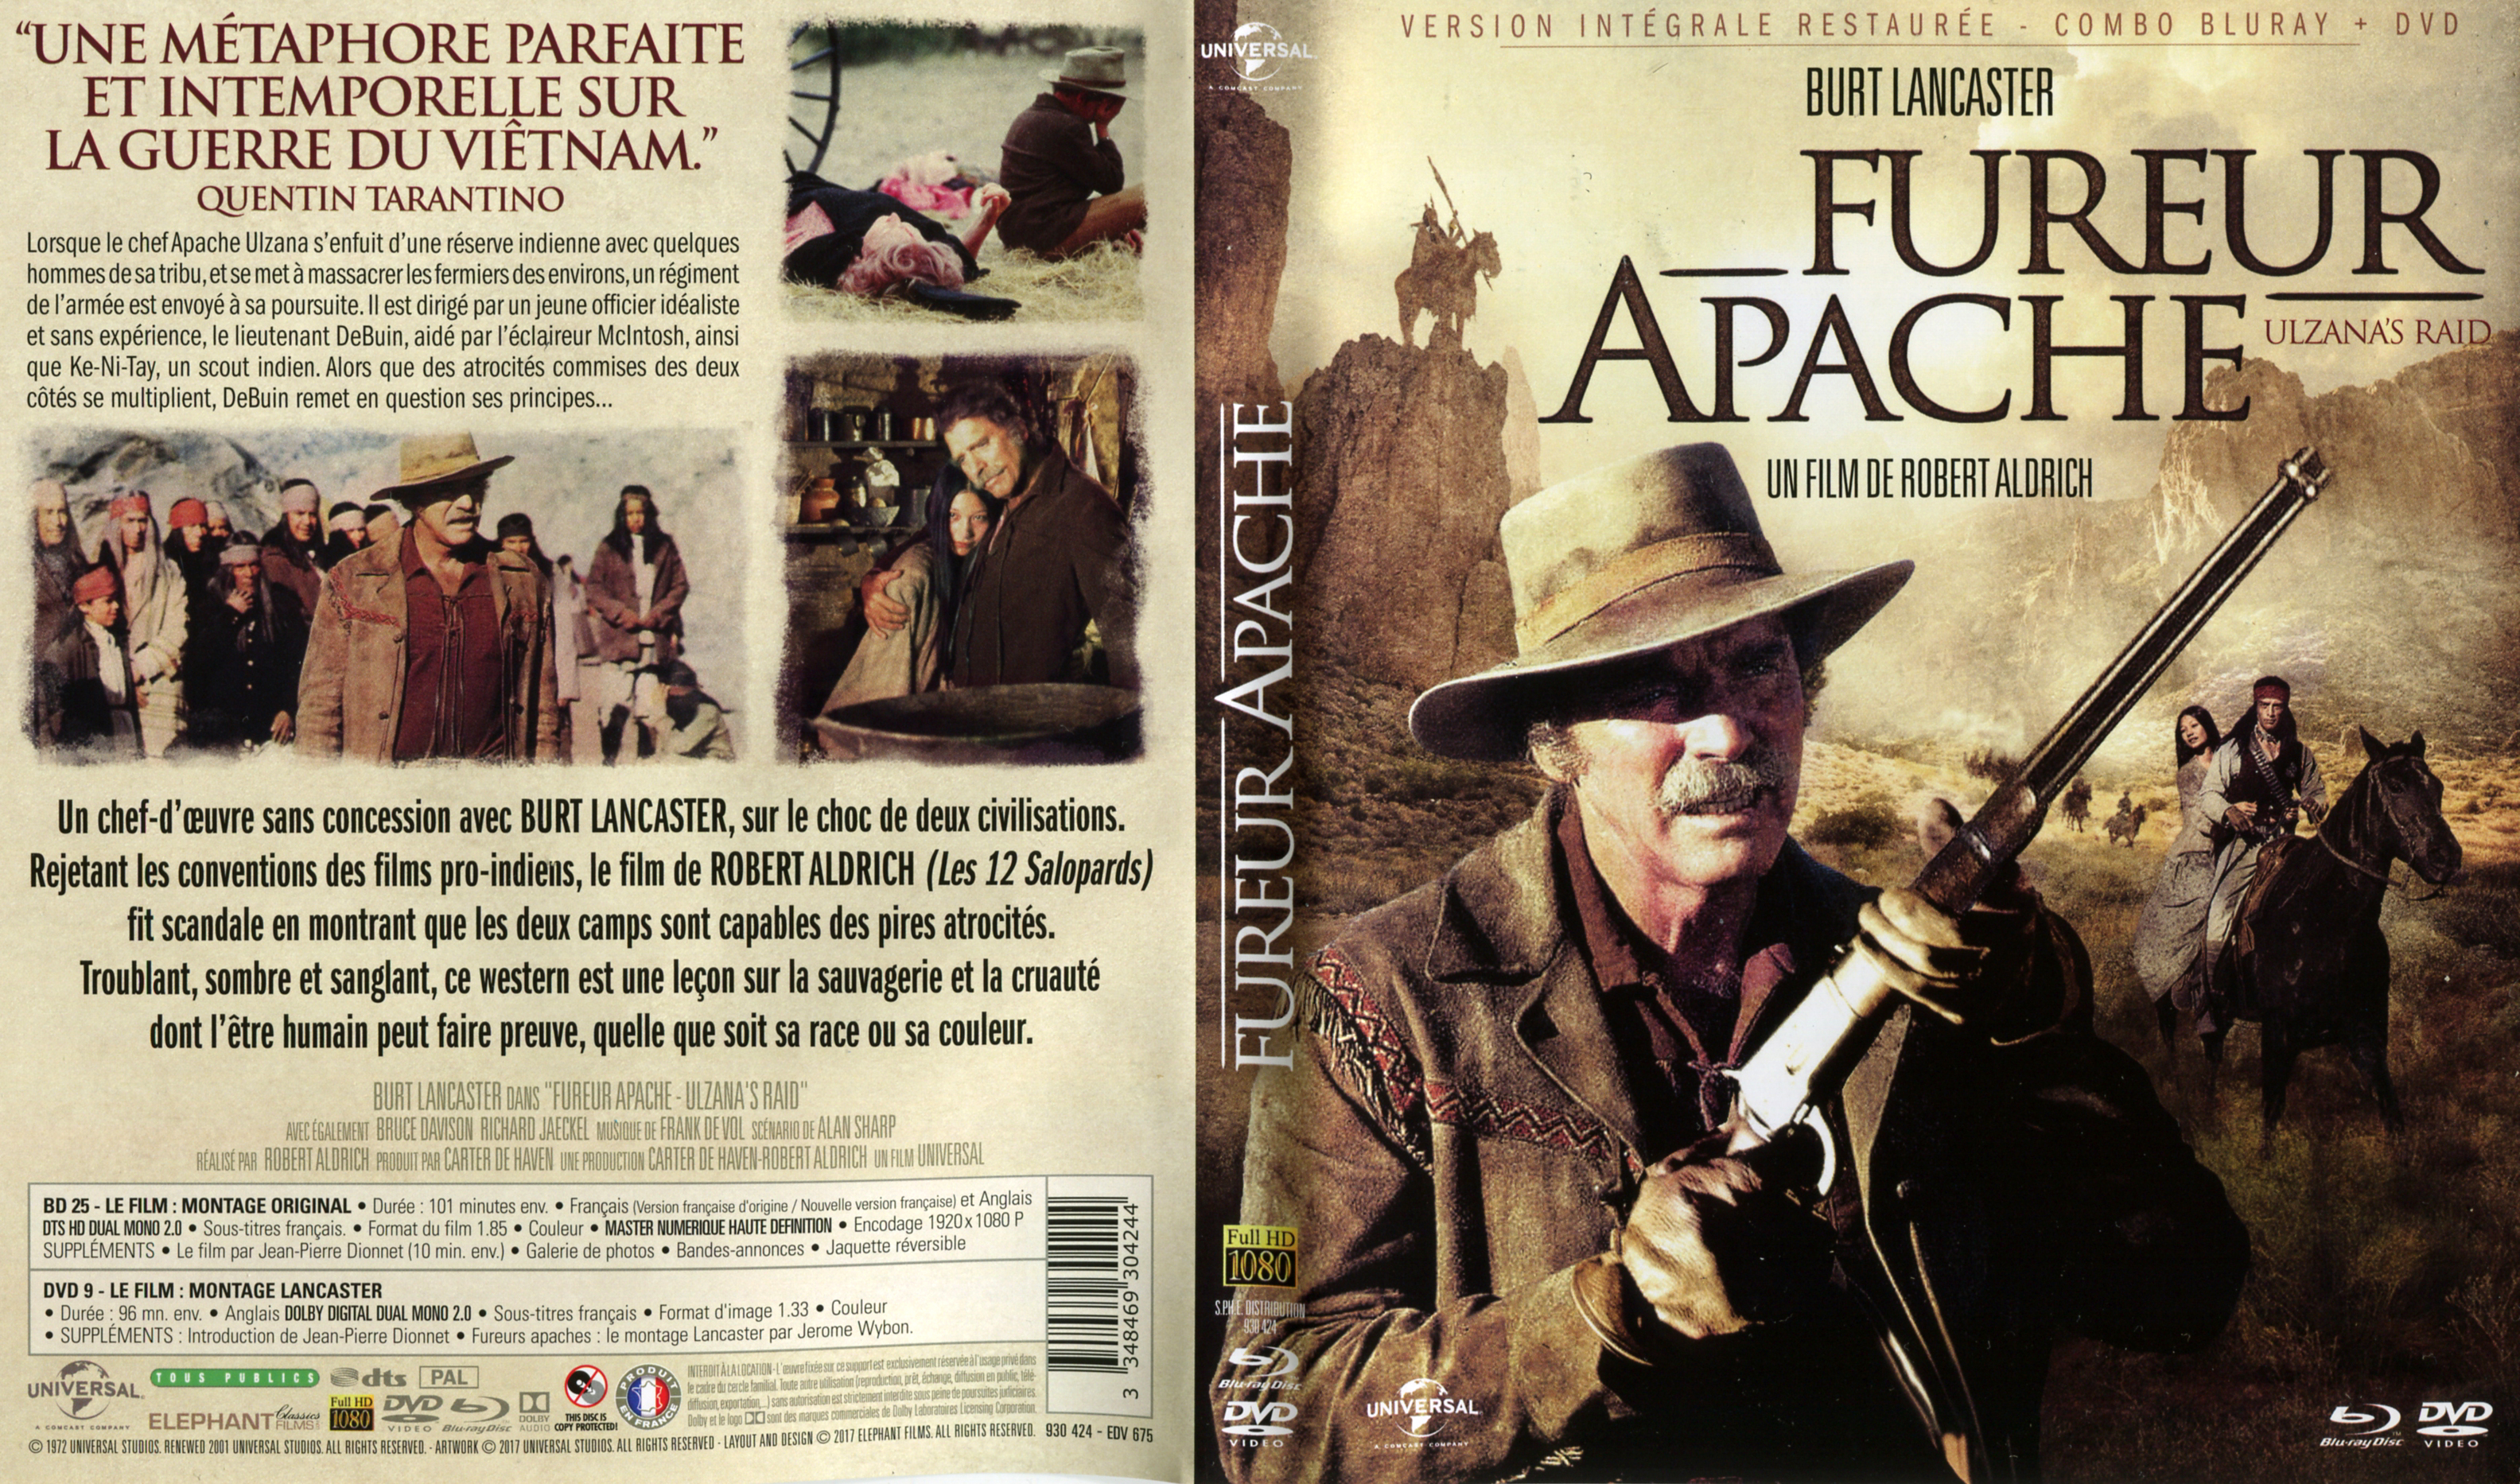 Jaquette DVD Fureur Apache (BLU-RAY) v2